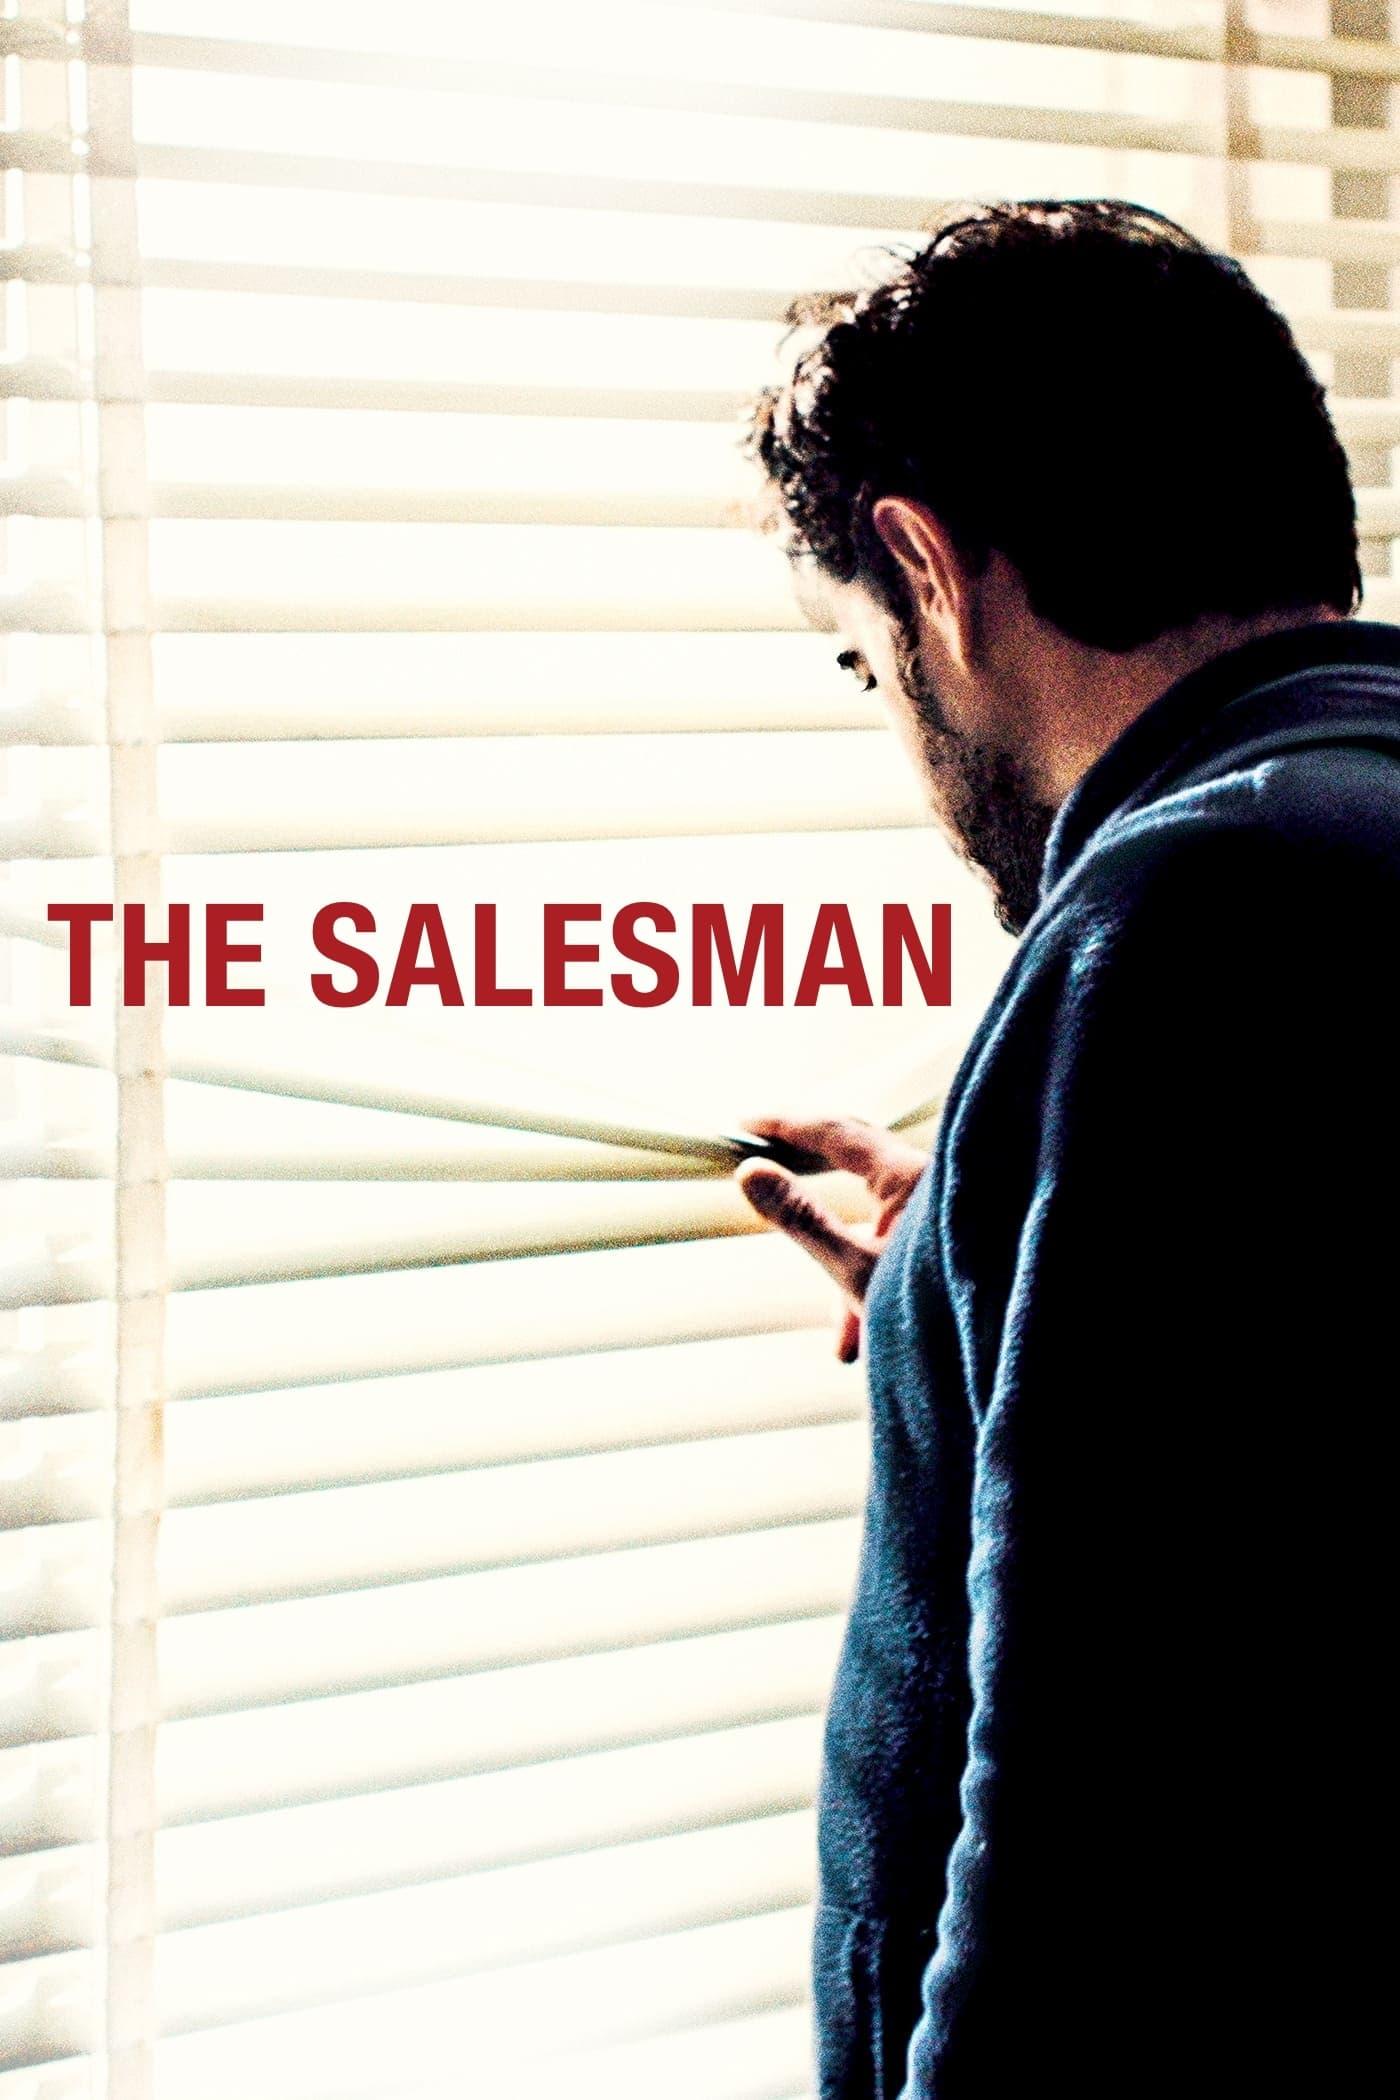 The Salesman poster